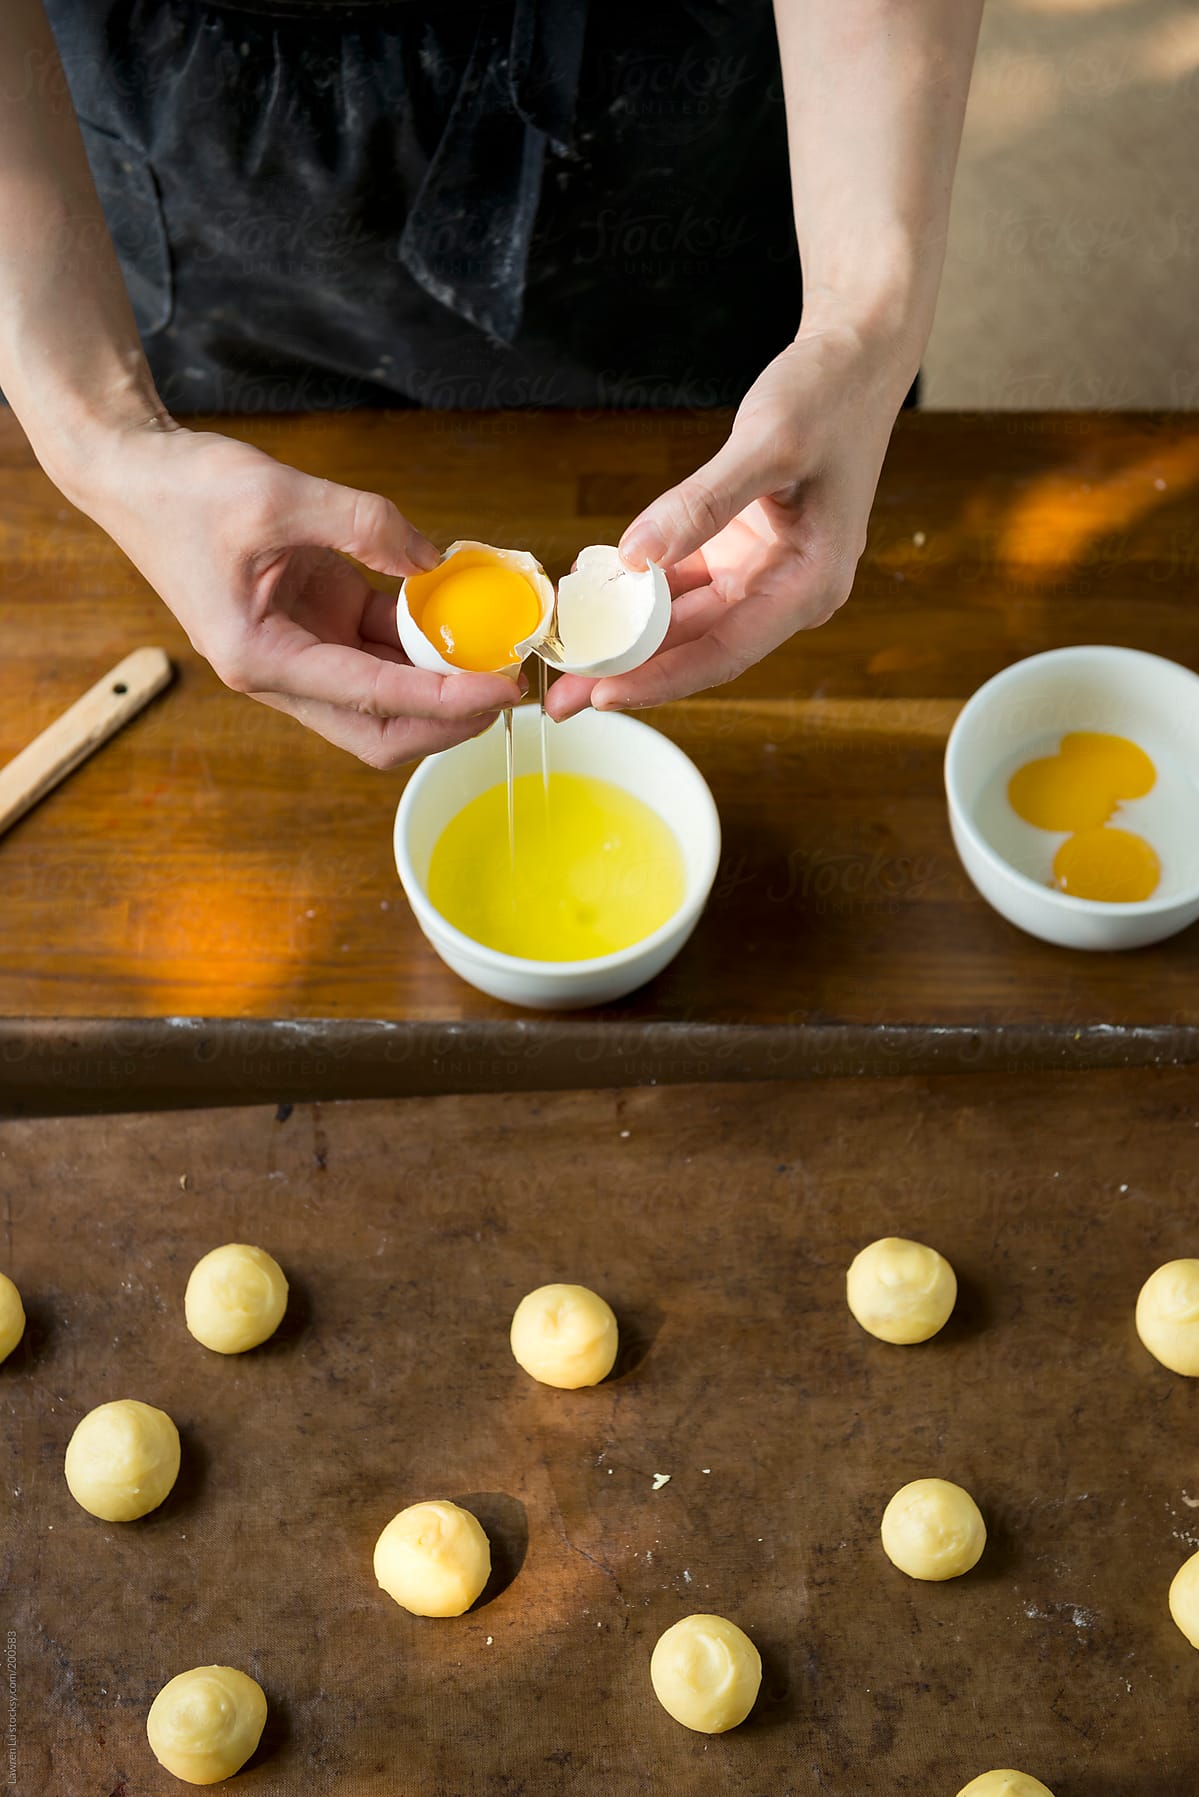 Woman hands separating egg yolk for brushing bread